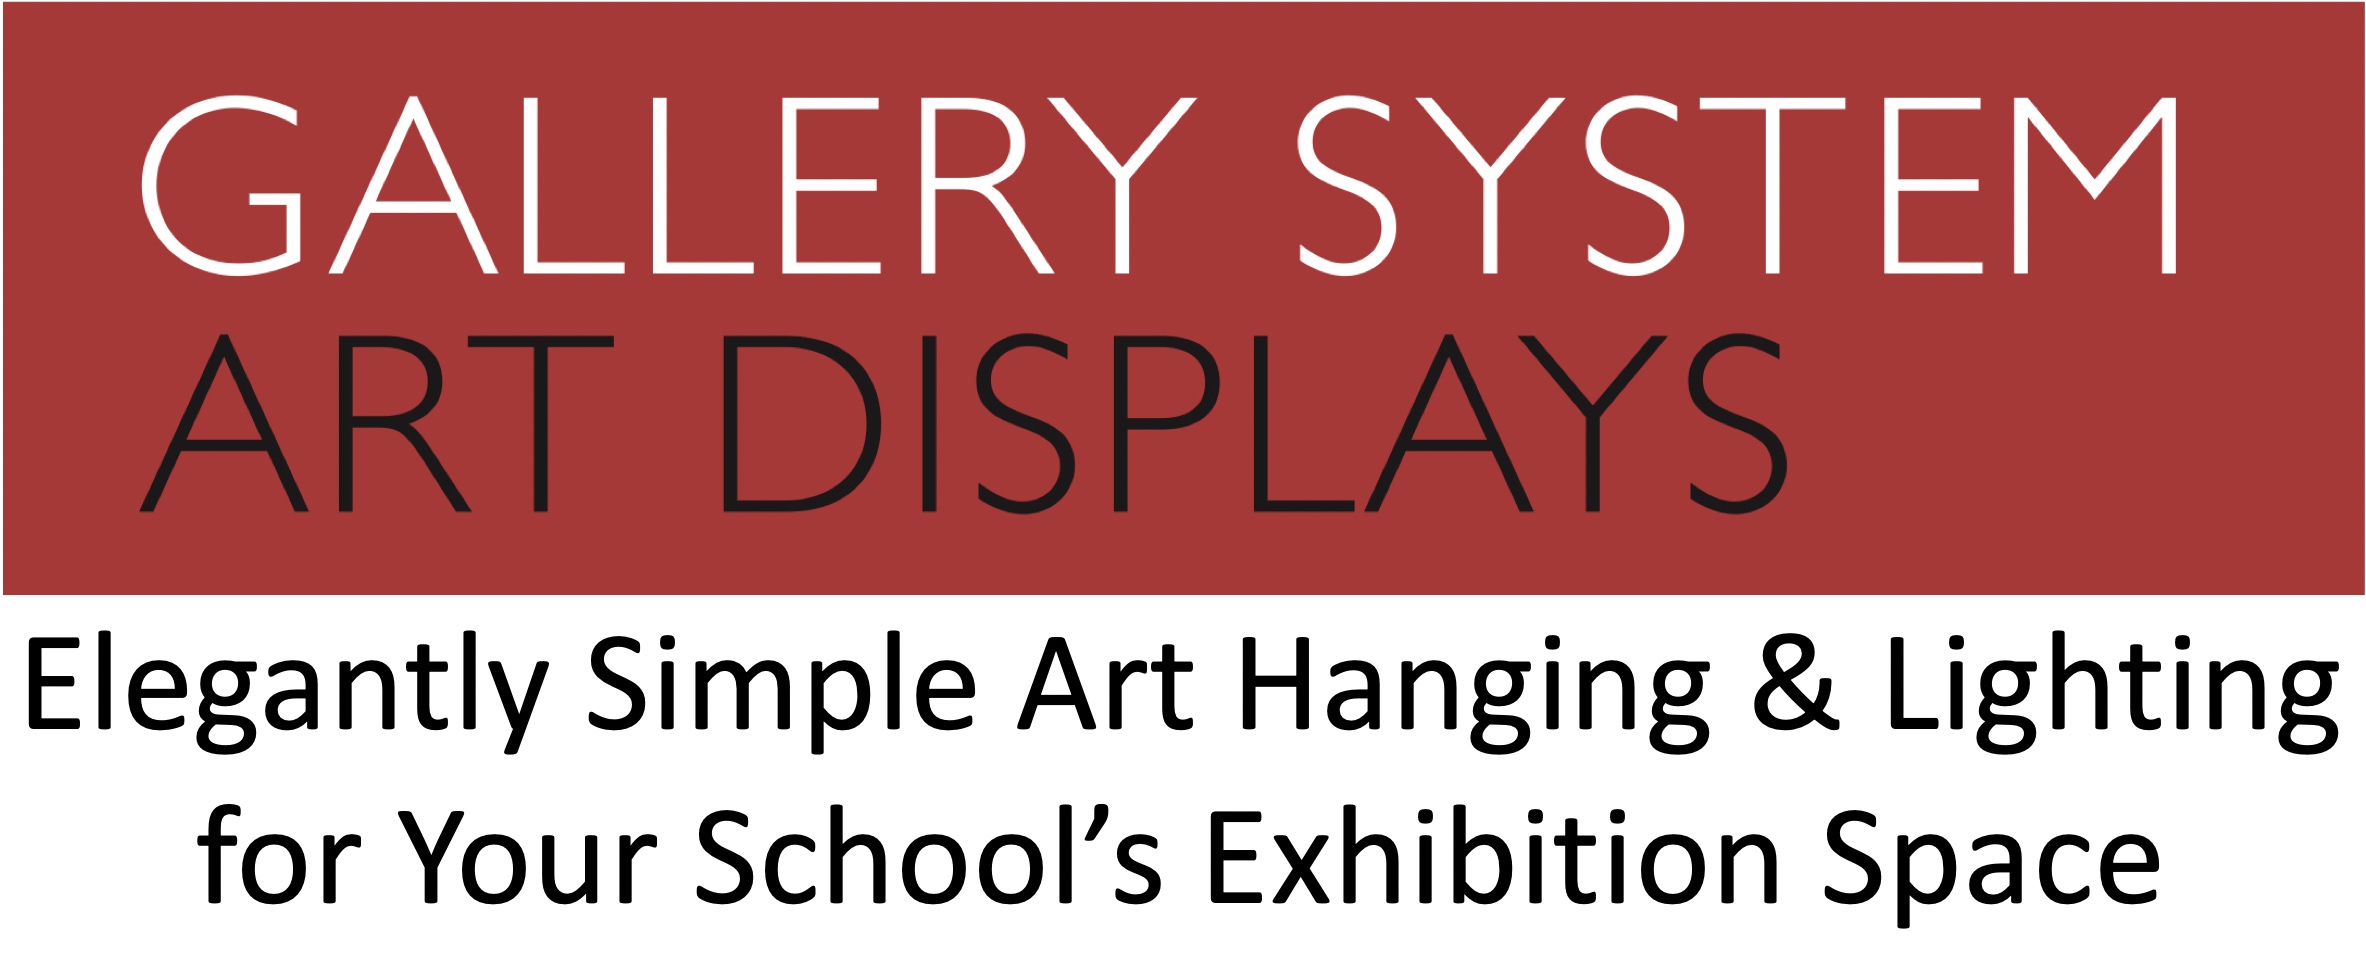 Gallery System